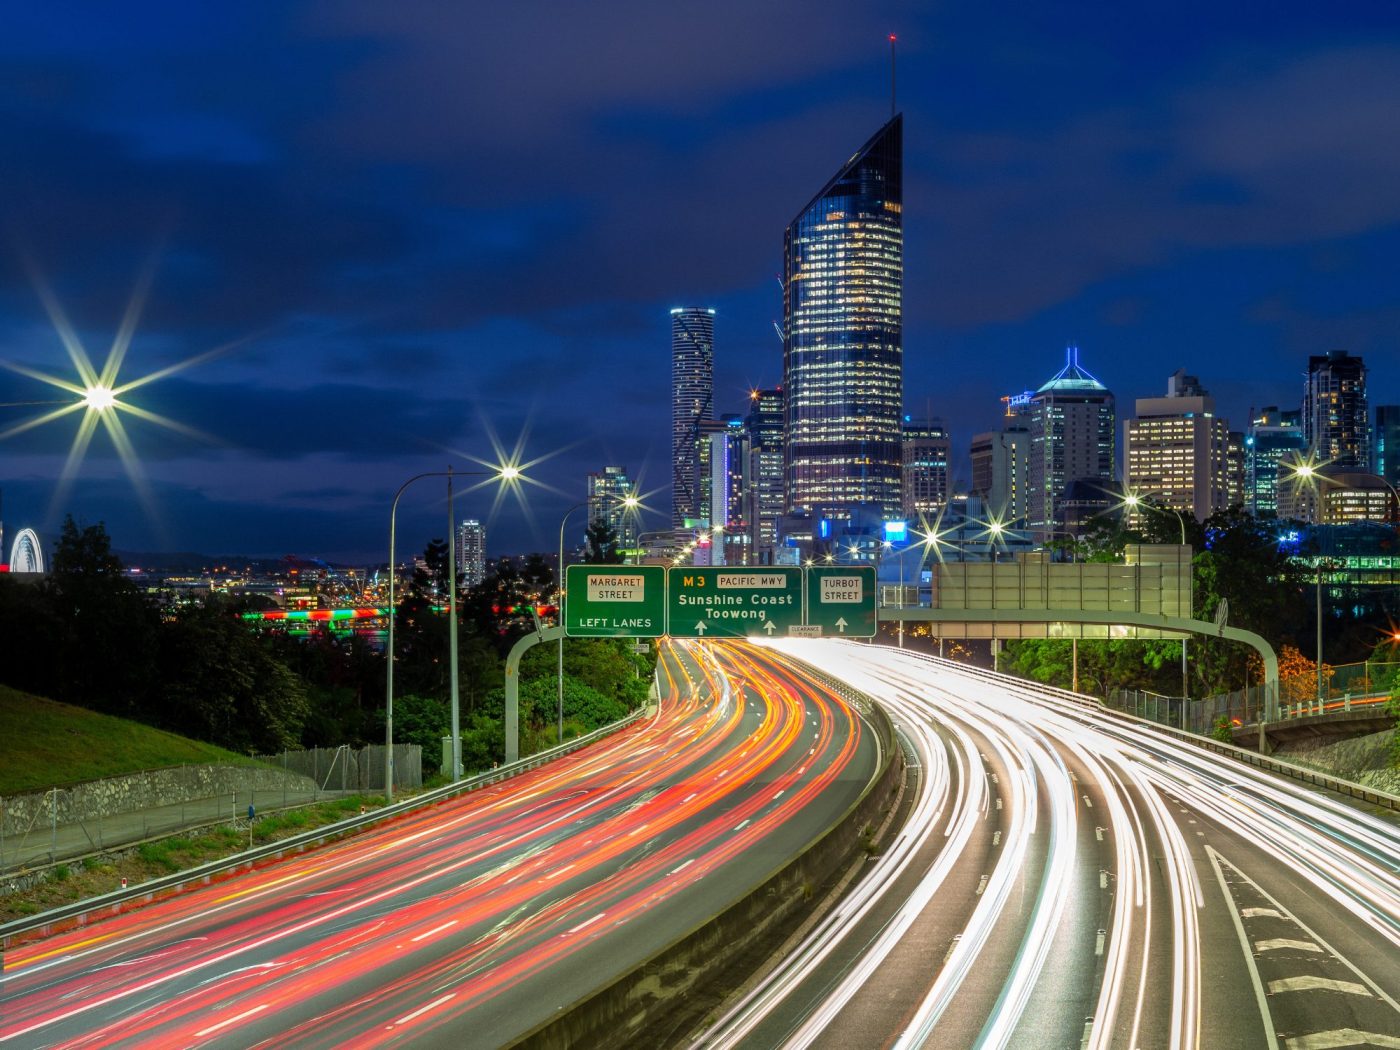 Image of the Riverside Expressway in Brisbane at night